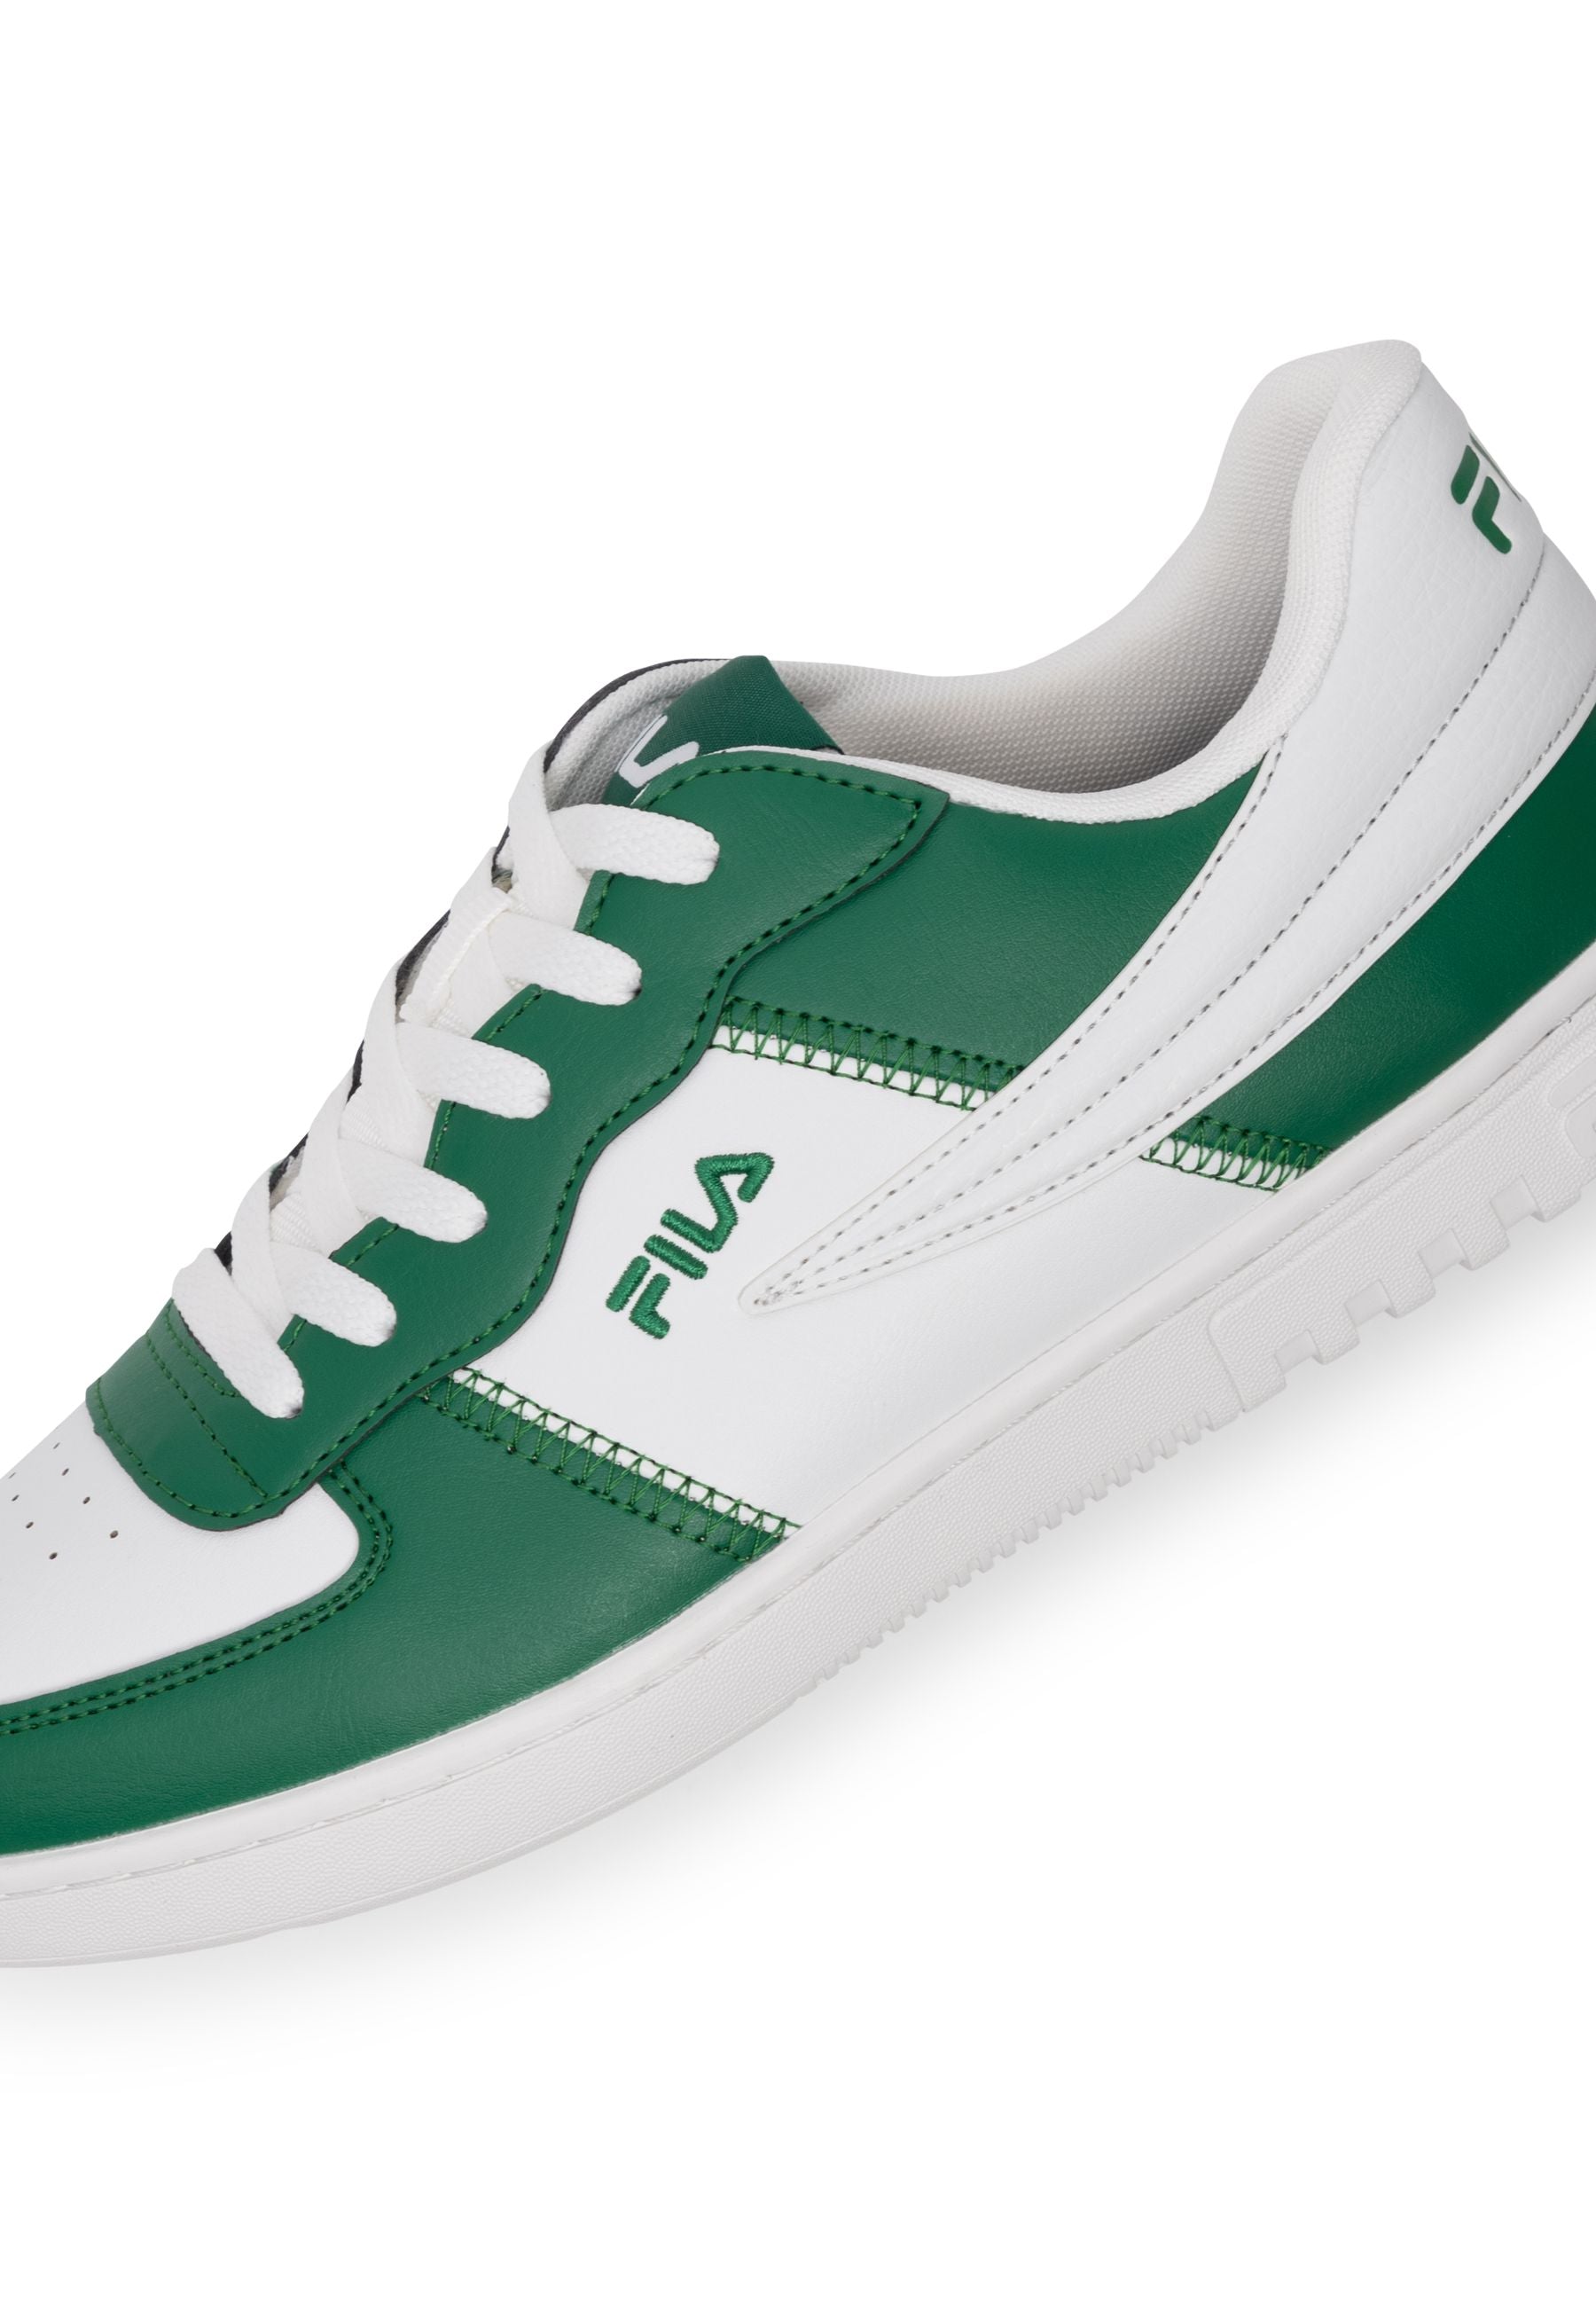 Noclaf in White-Verdant Green Sneakers Fila   